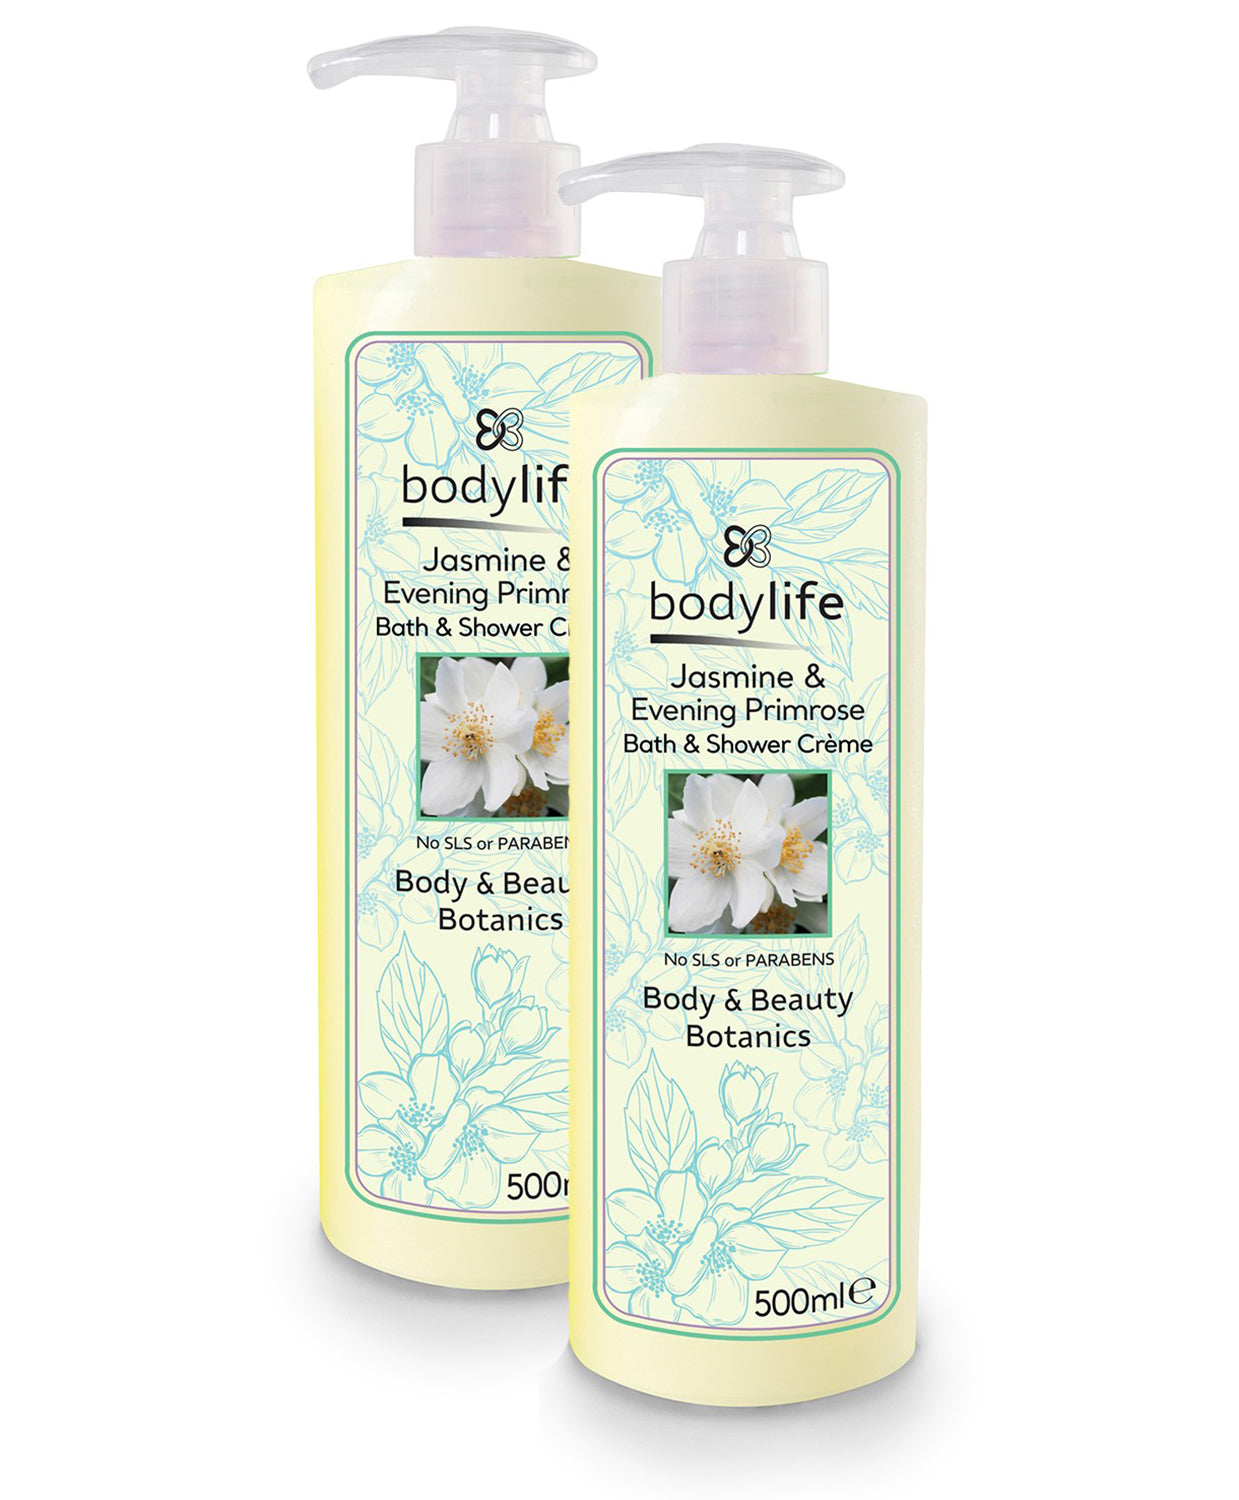 Bodylife Body Wash Shower Creme Jasmine & Evening Primrose 500ml Twin Pack